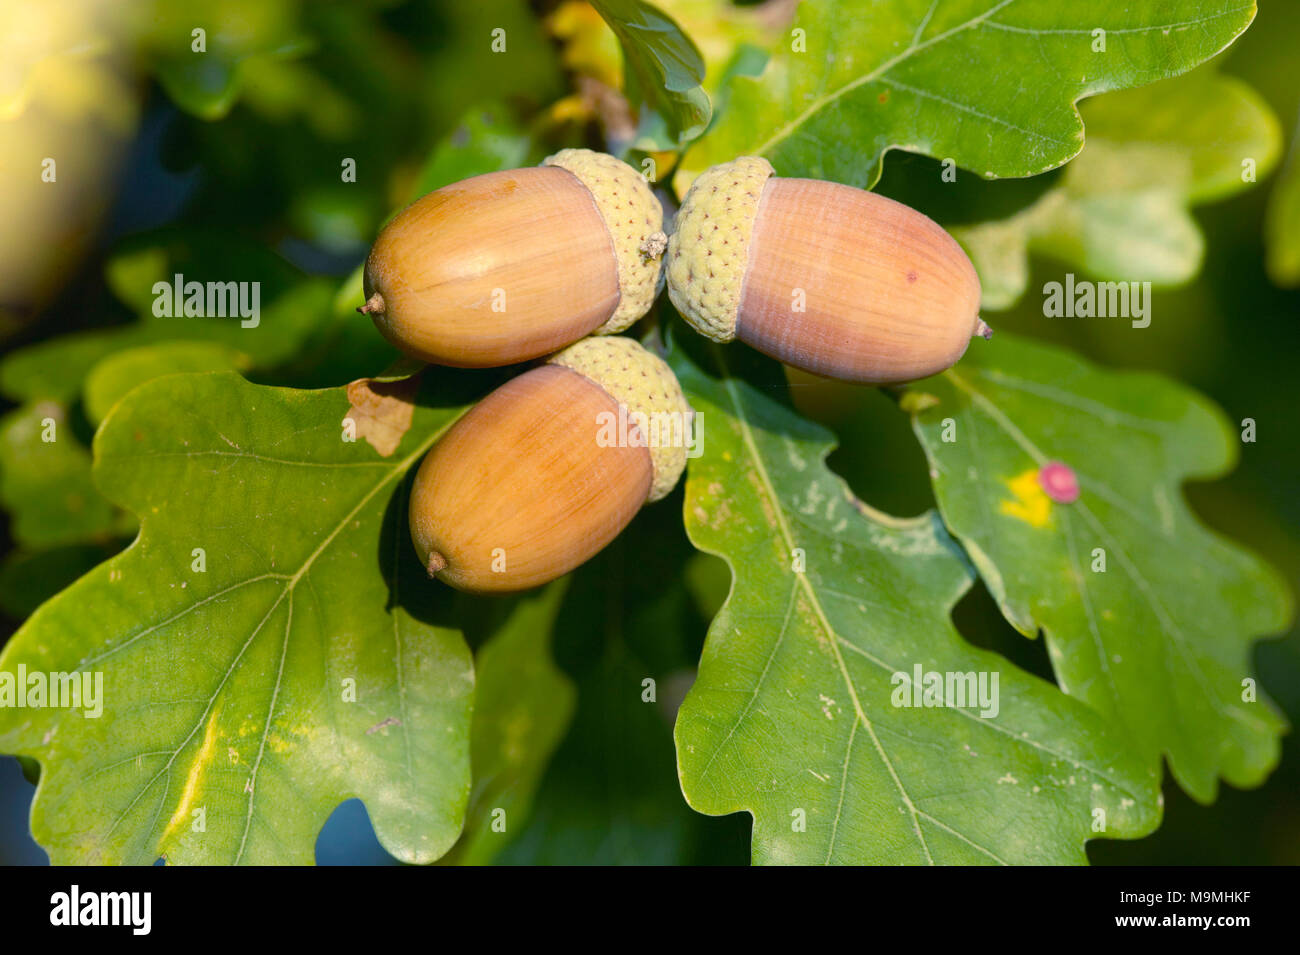 Inglés roble común, roble (Quercus robur). Bellotas maduras en una ramita. Alemania Foto de stock